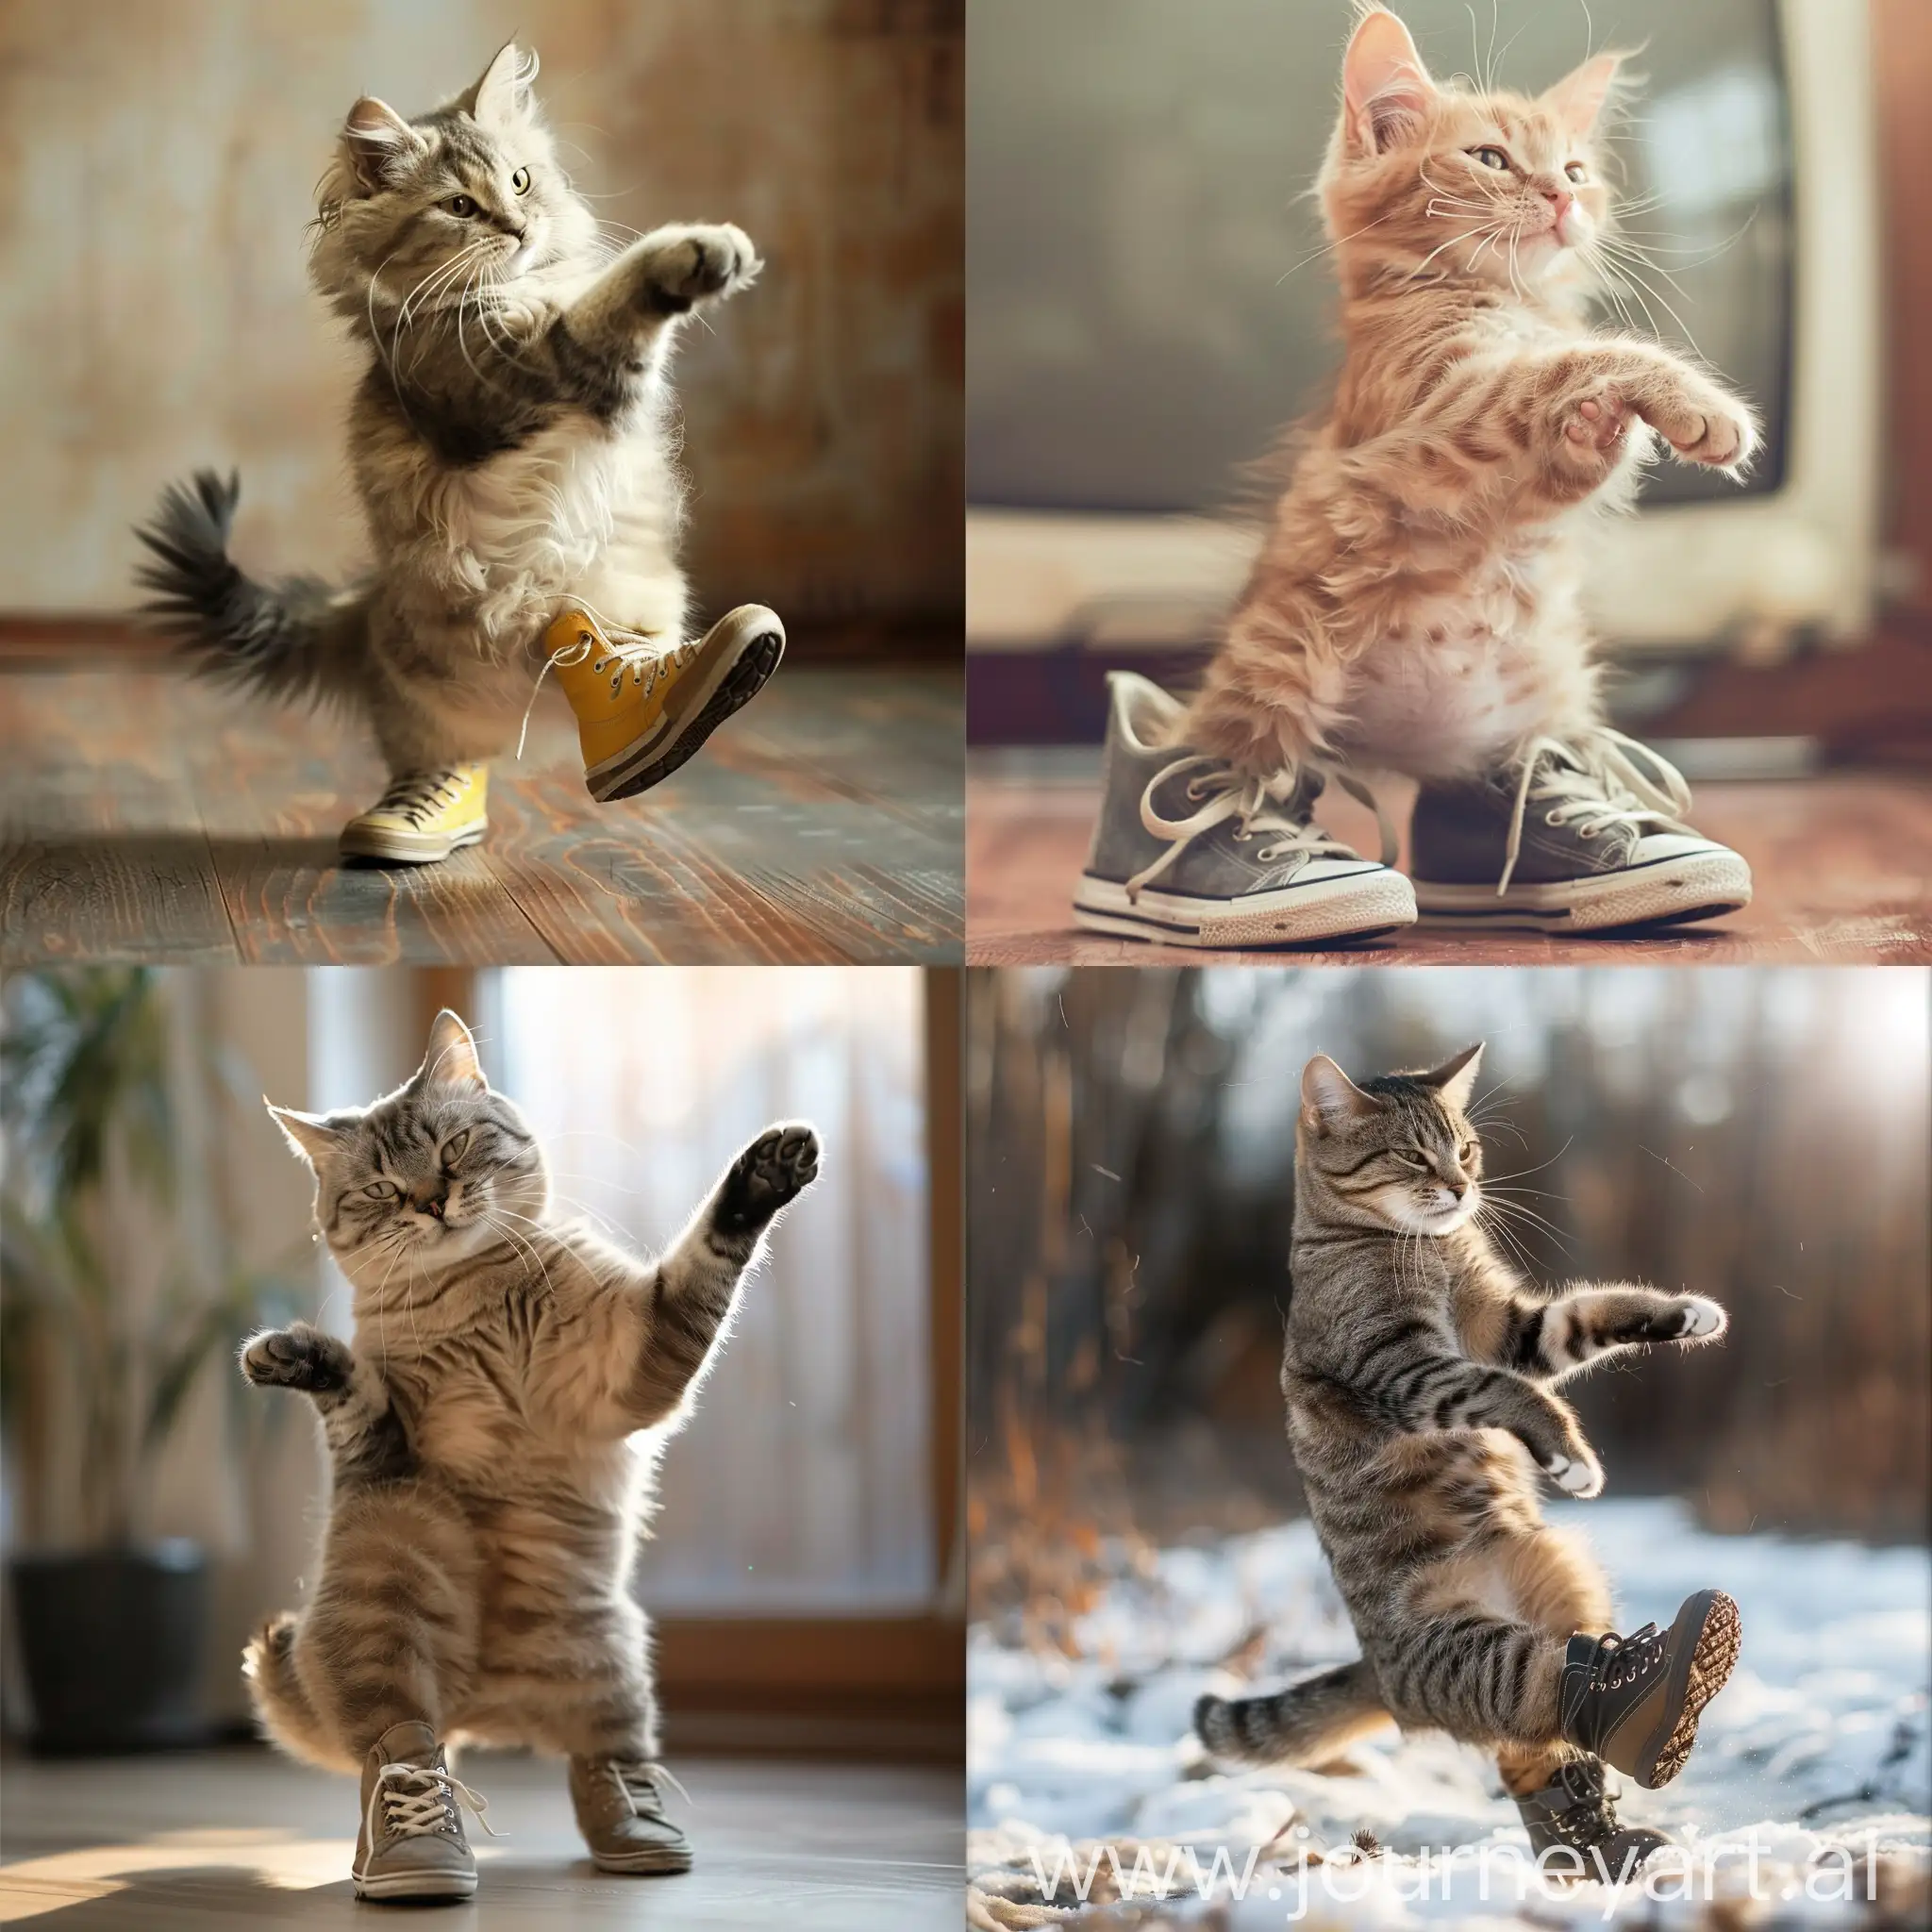 Tanzende Katze in Schuhe
